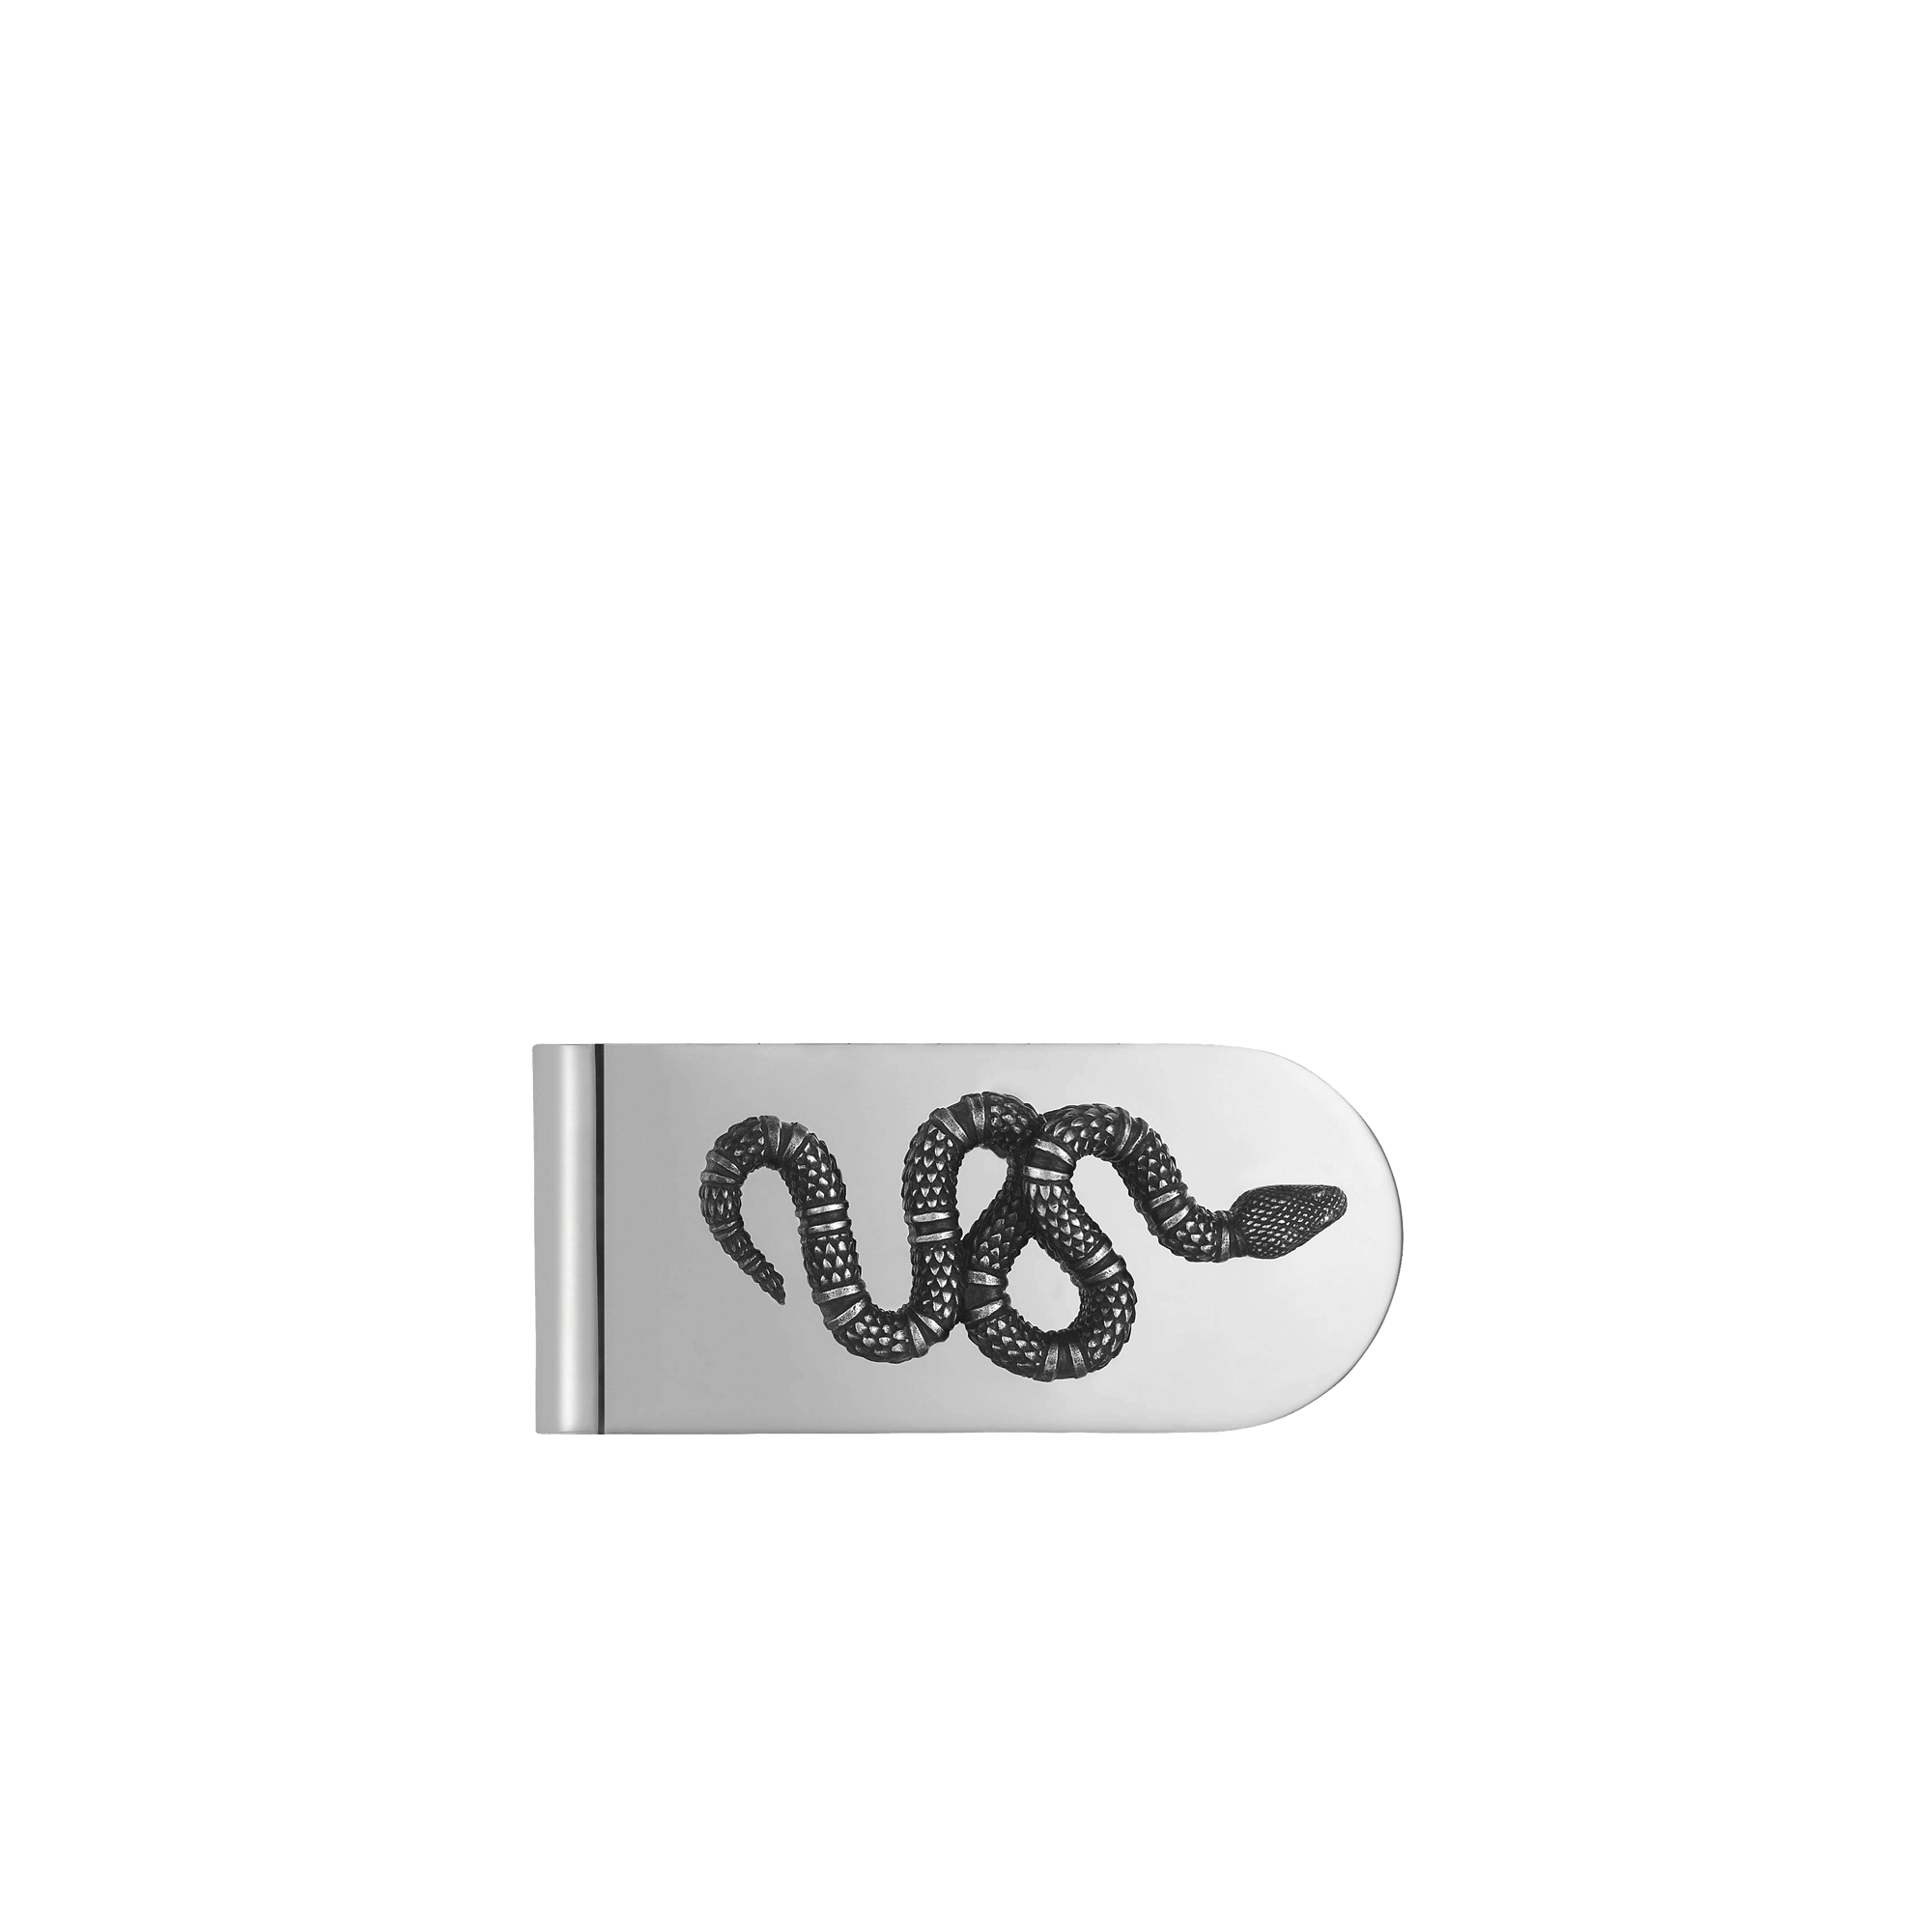 Fermasoldi Gucci serpente in argento